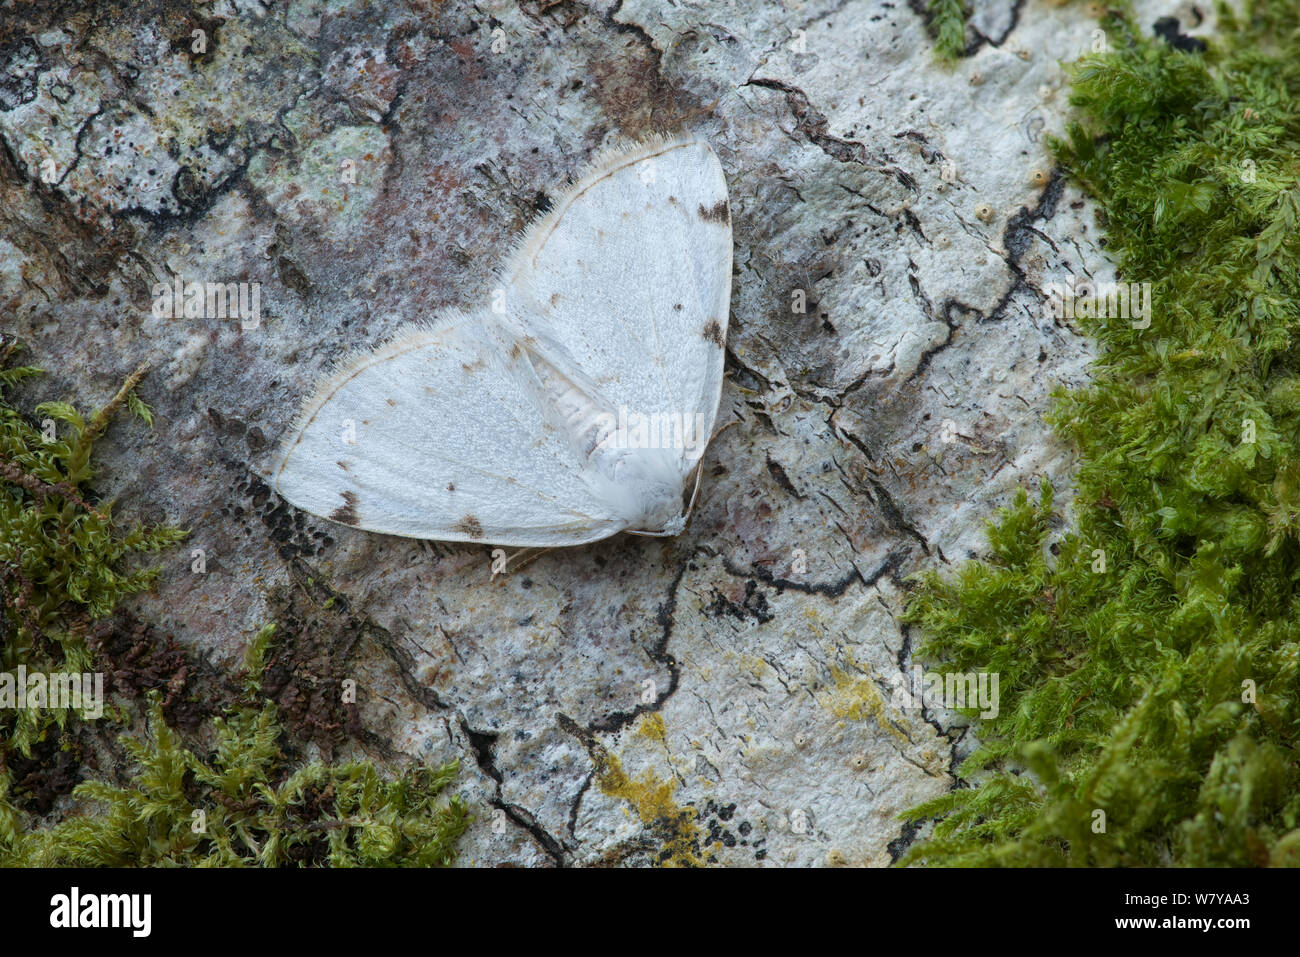 Weiß-Ritzel beschmutzt Motte (Lomographa bimaculata) ausruhen, Annagariff Holz National Nature Reserve, Moore Park, County Armagh, Nordirland, Großbritannien. April. Stockfoto